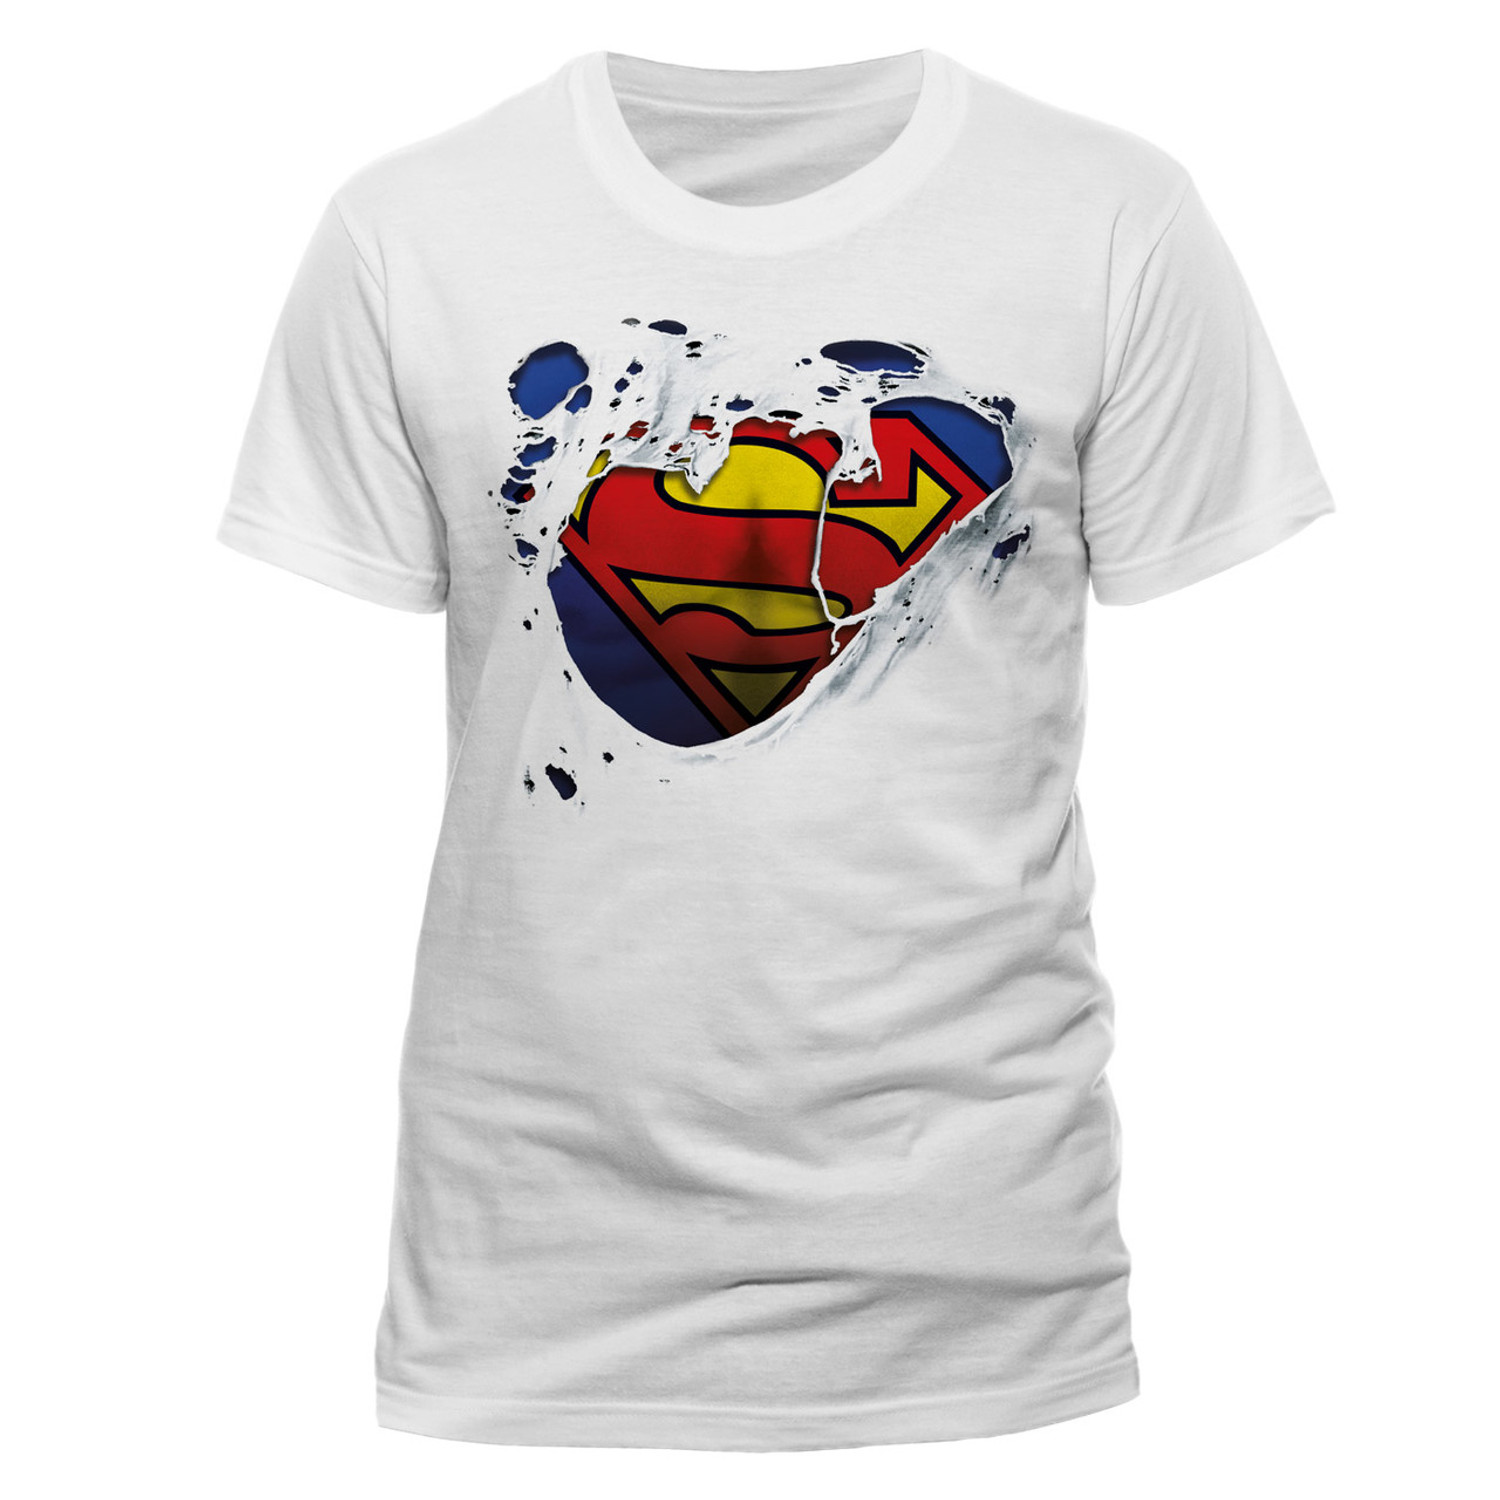 Superman Torn Logo Now T- Comics Buy White shirts DC Superman T-Shirt. at Official Unisex